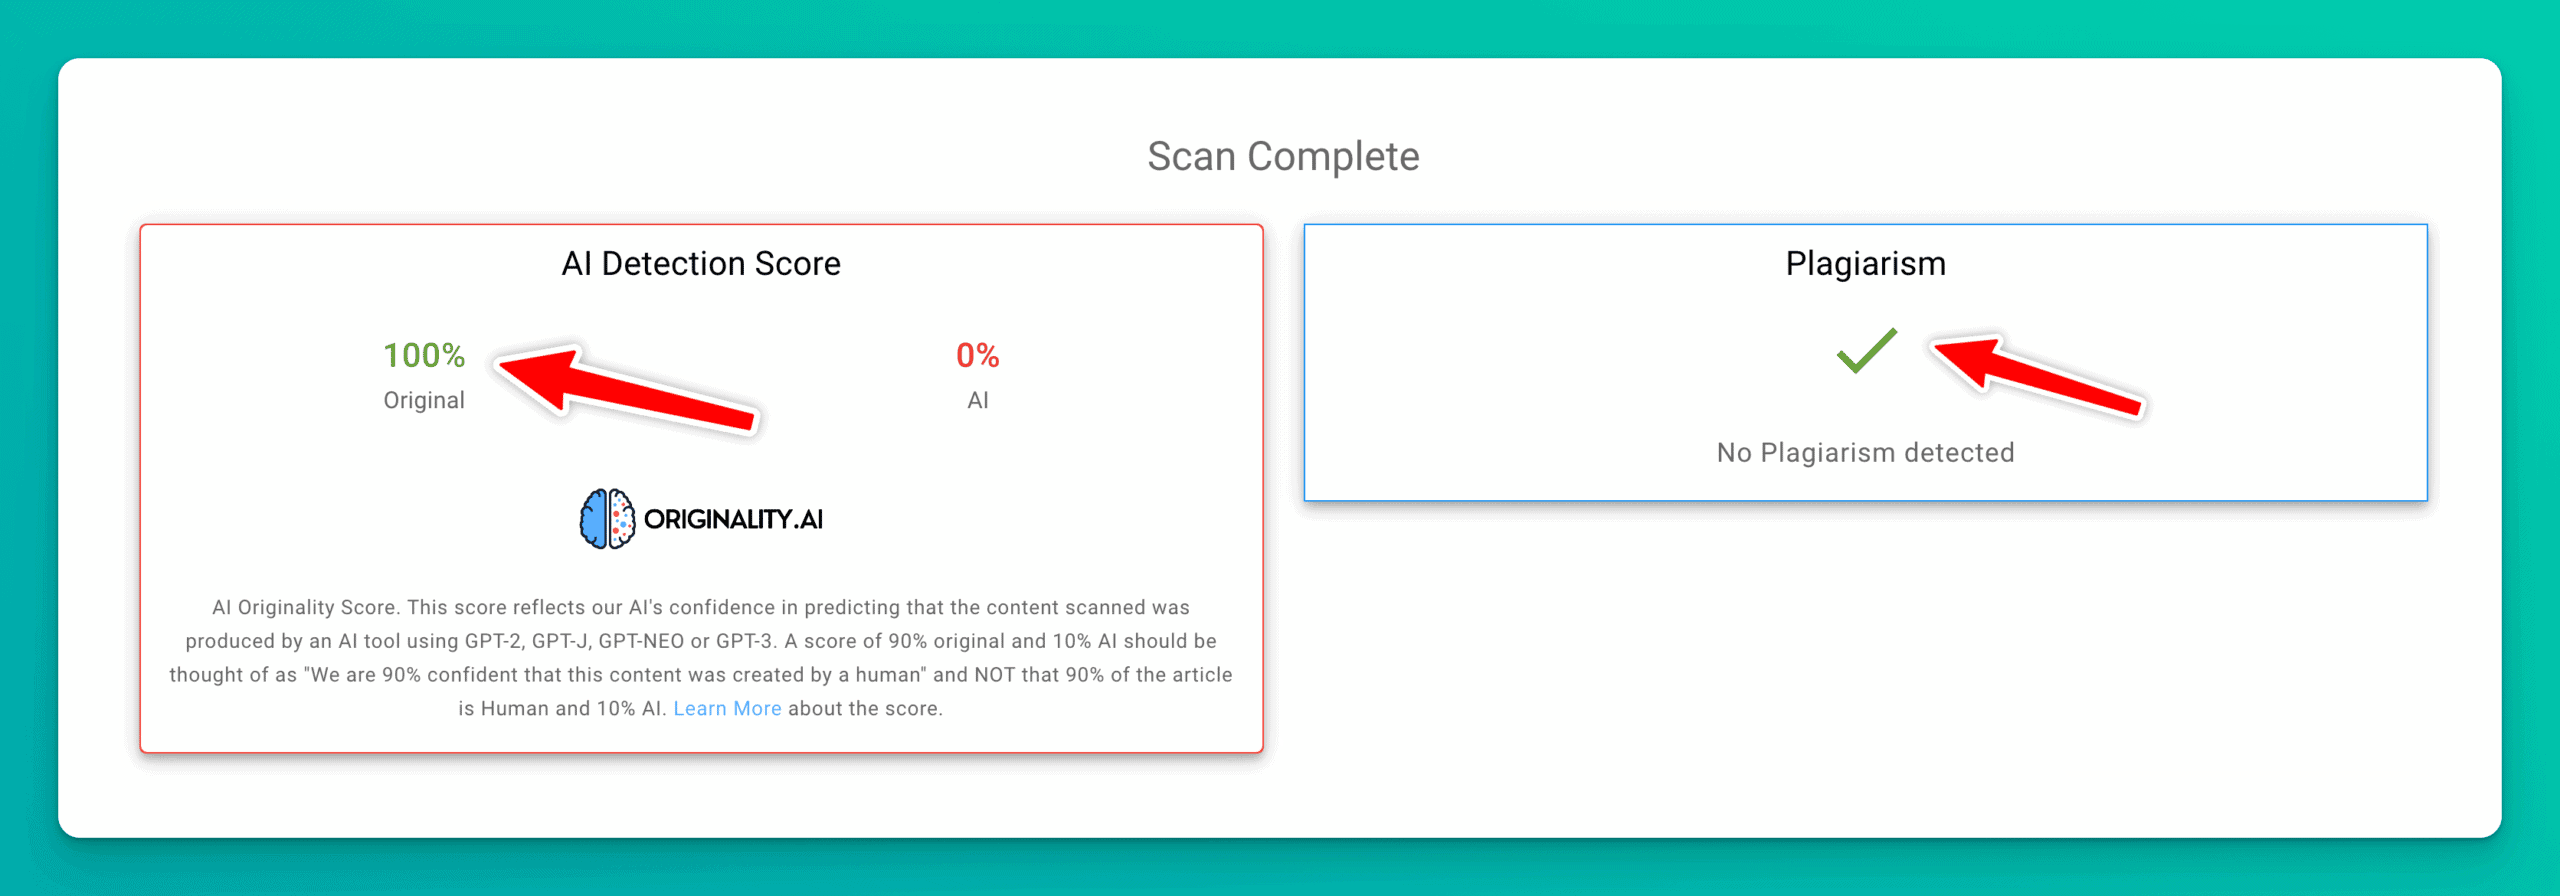 Originality.ai AI Detection score results showing 100% original and non-copied text.